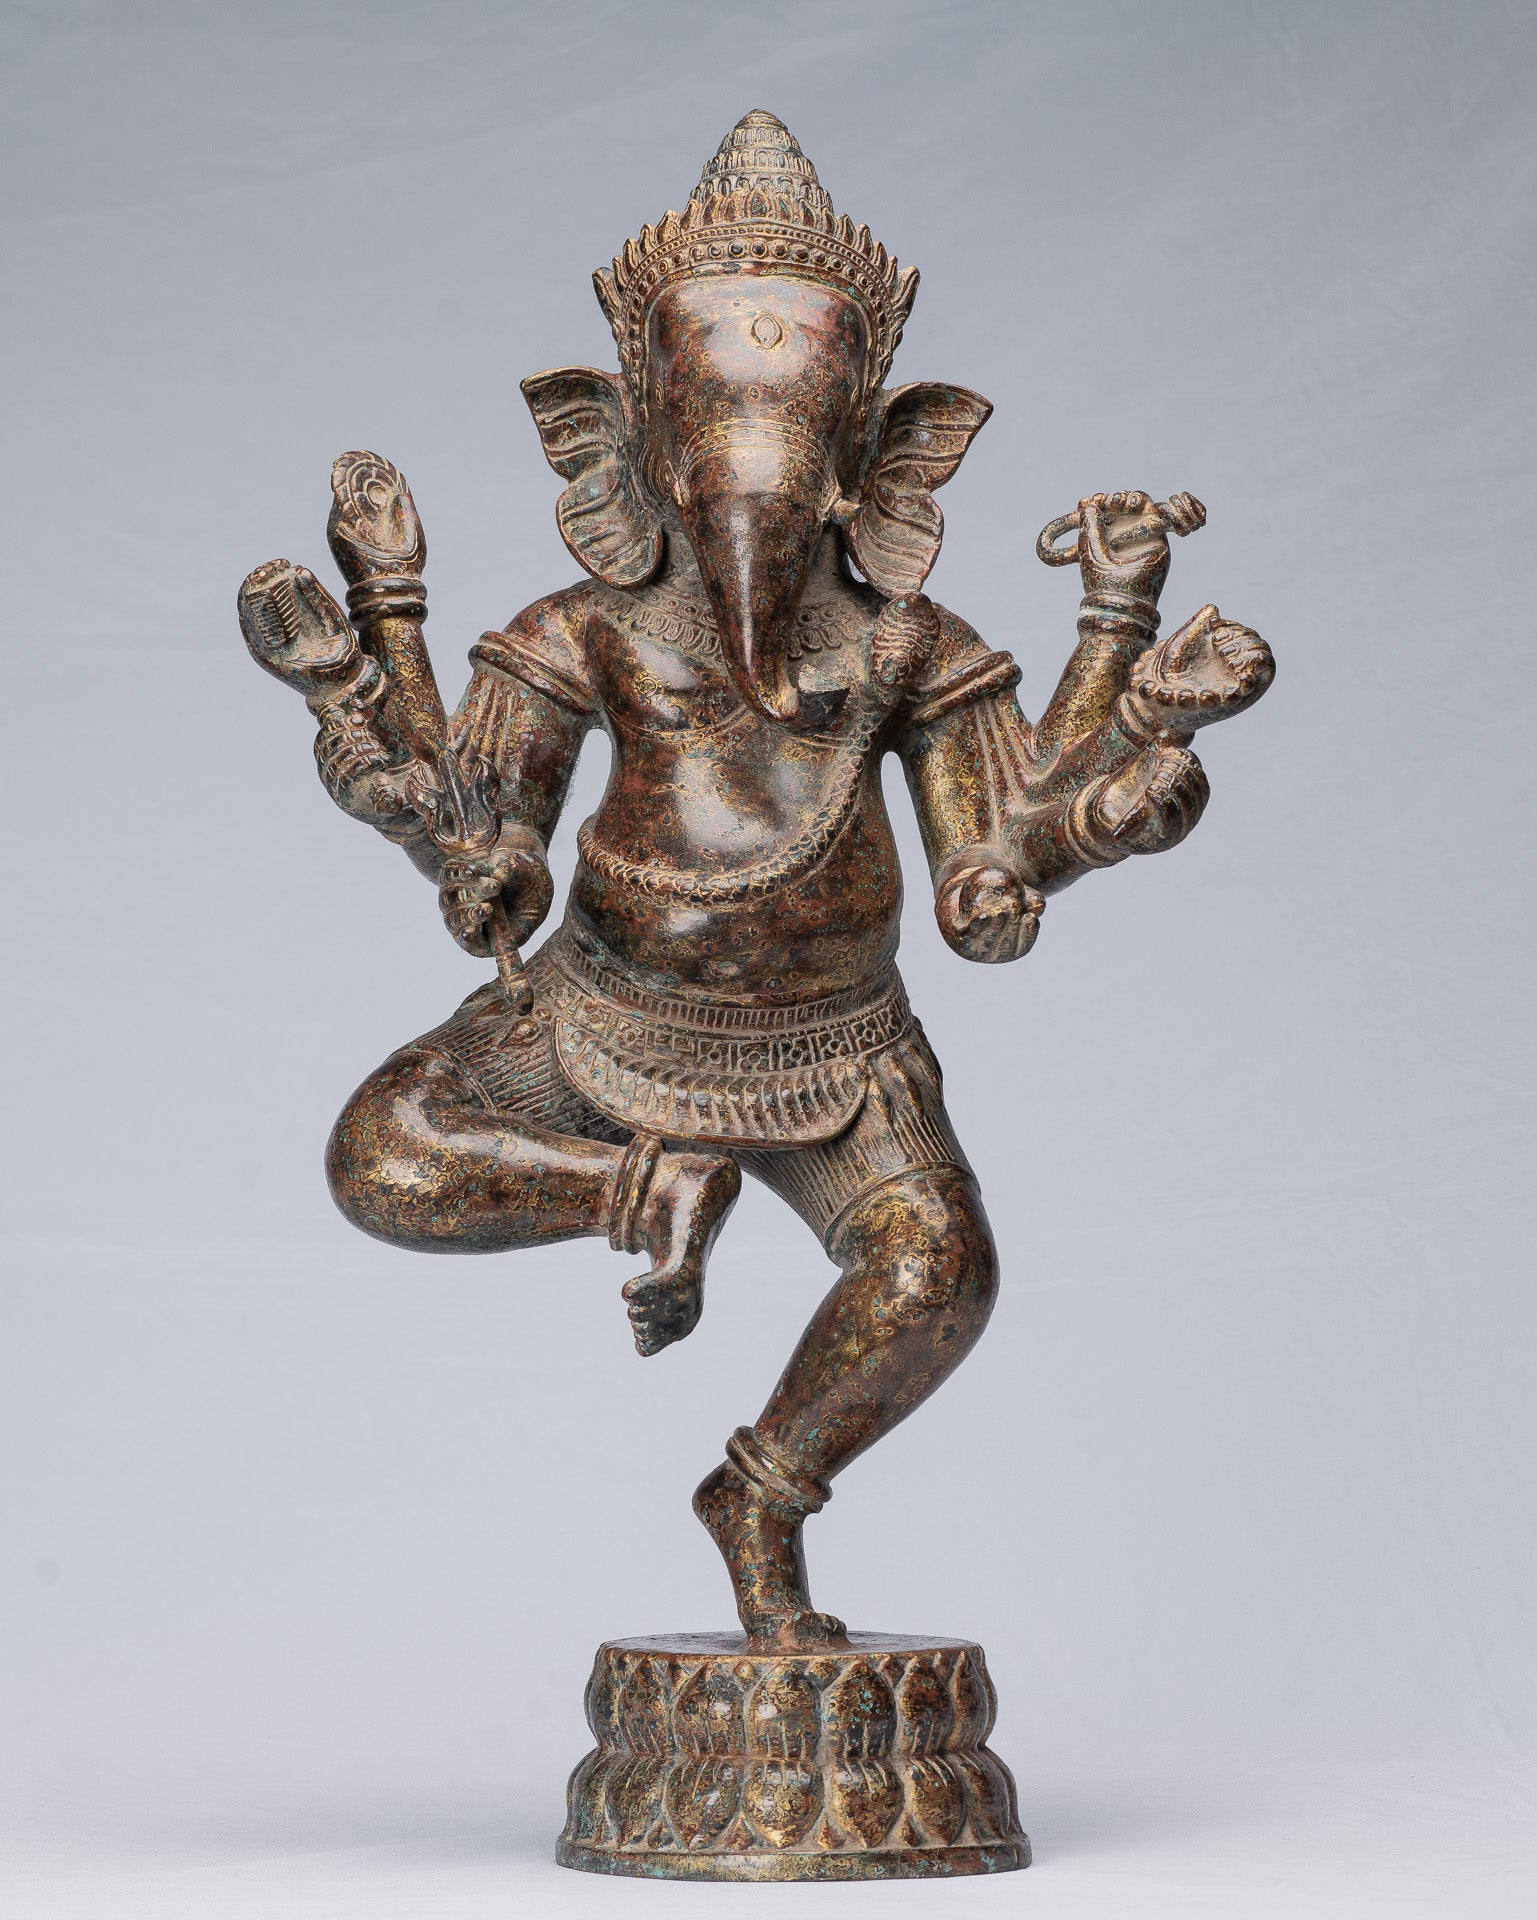 Dancing by lord Ganesha by Poorti Batra - Artist.com